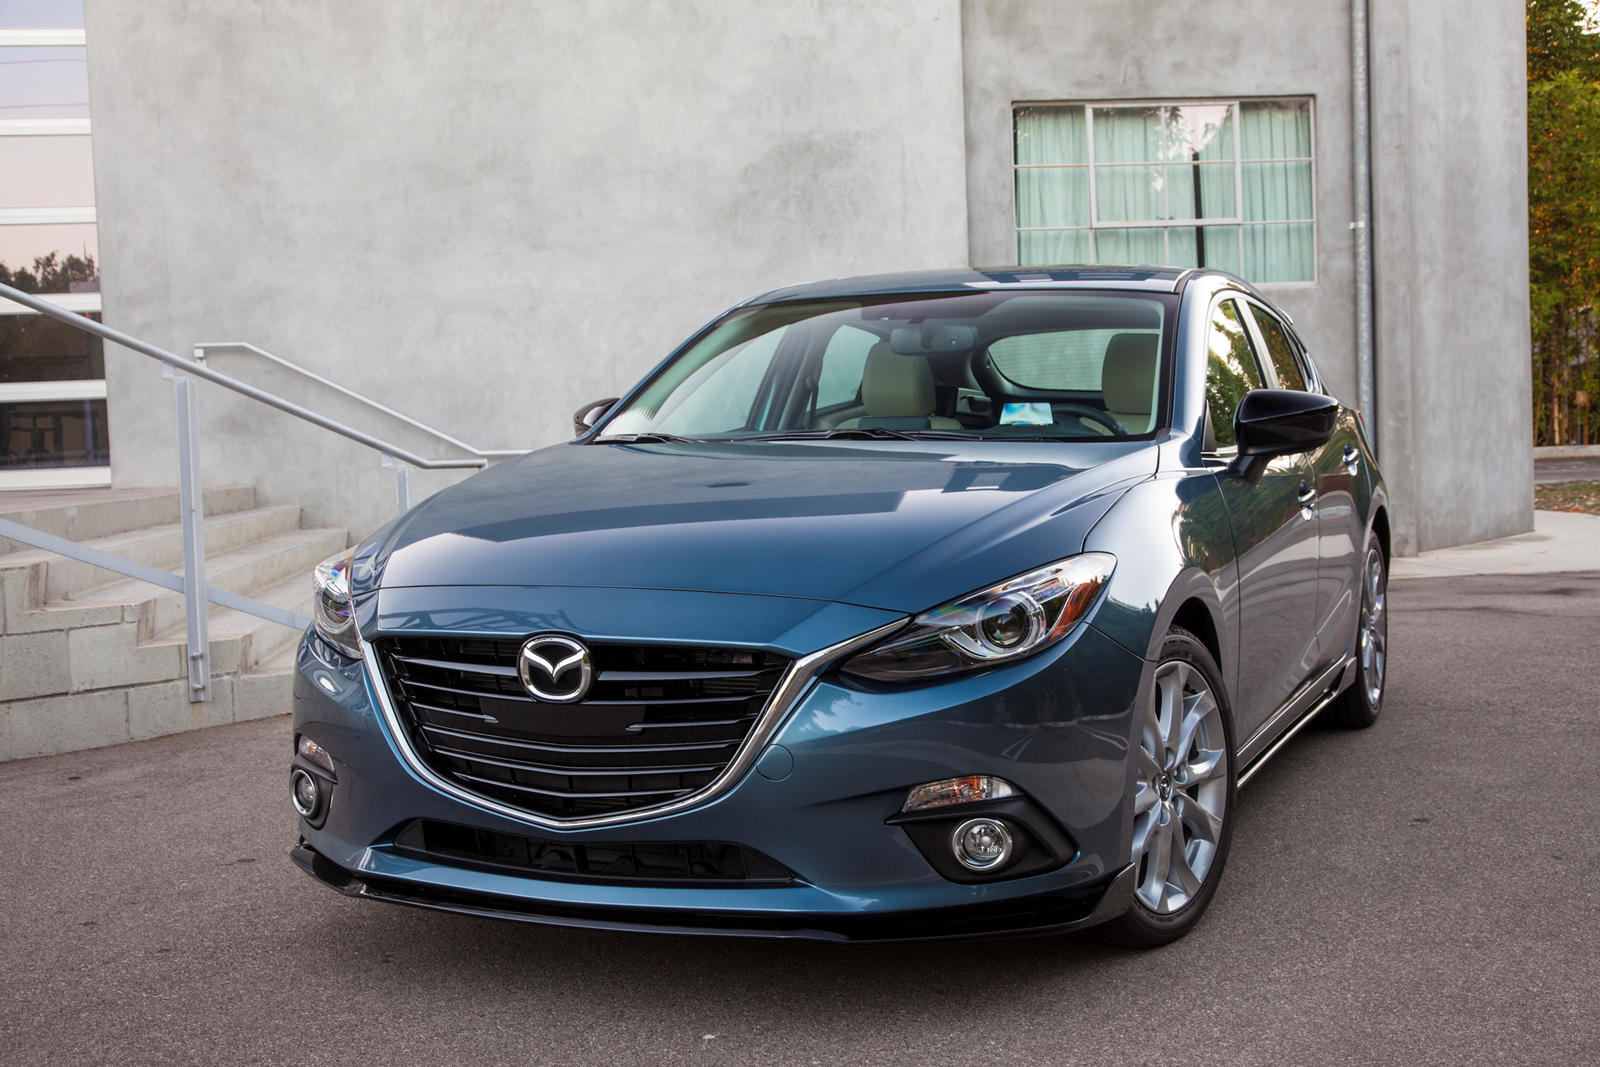 2016 Mazda 3 Hatchback: Review, Trims, Specs, Price, New Interior ...